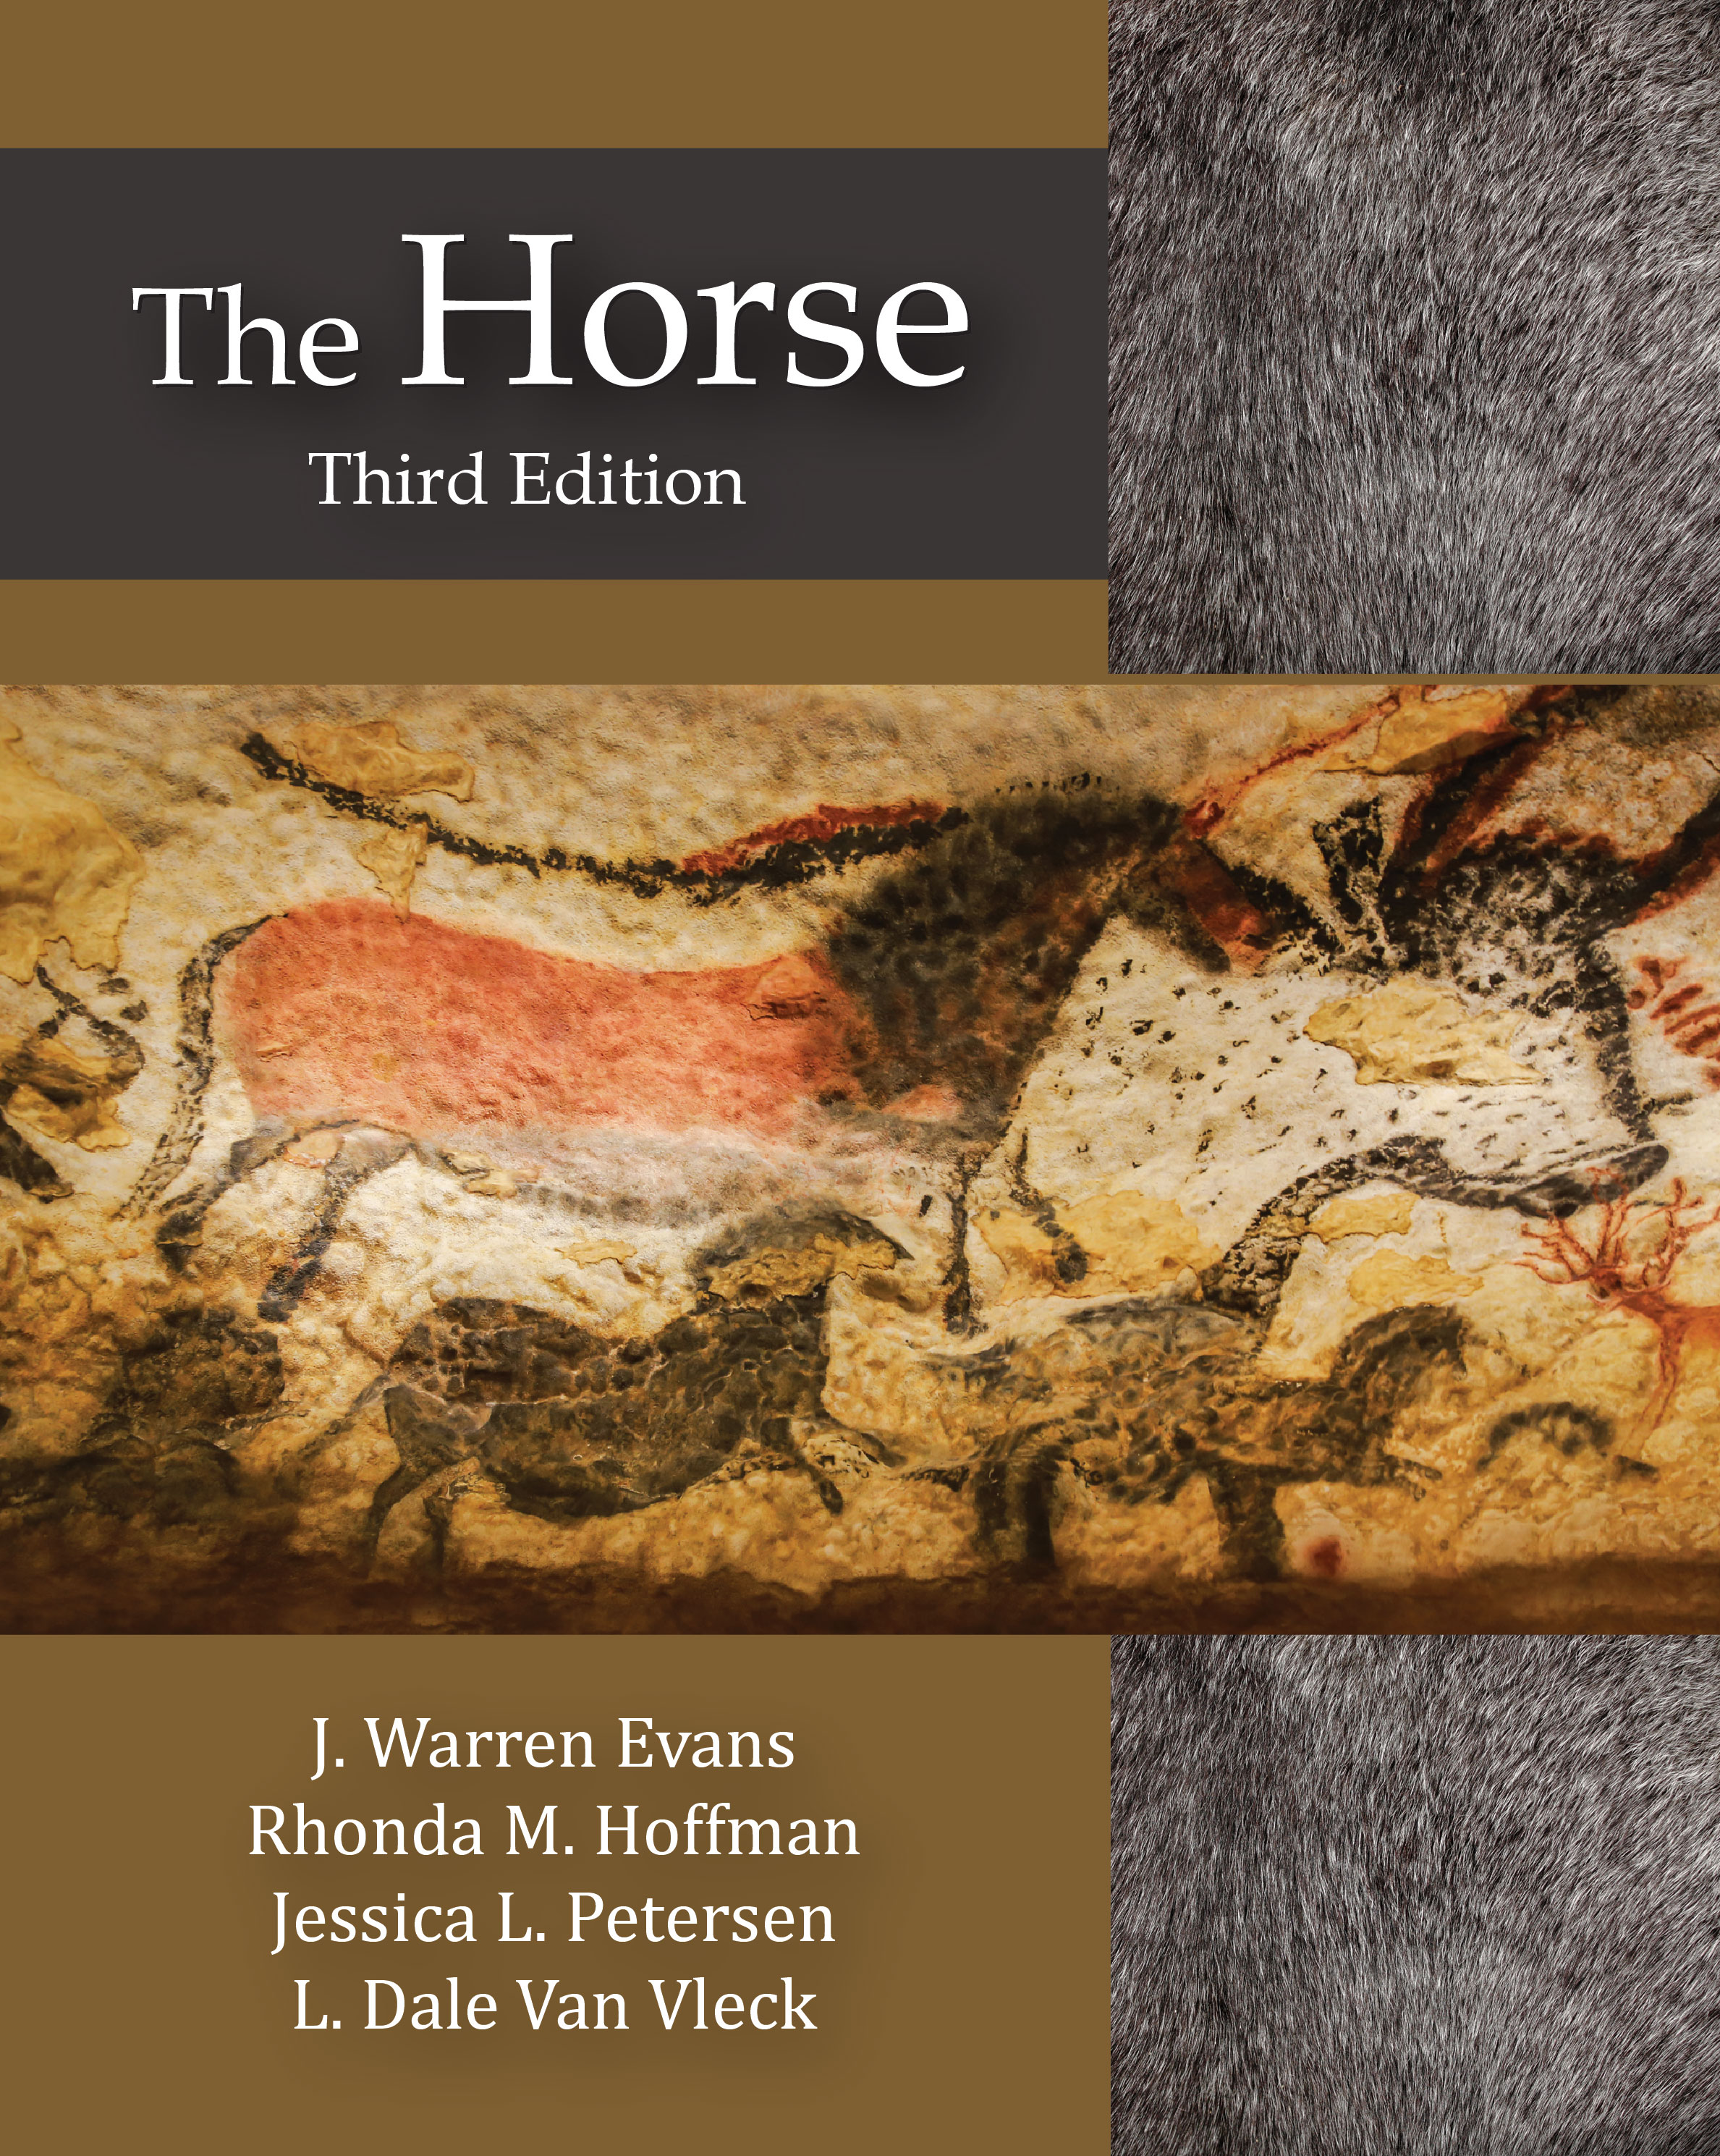 The Horse:  by J. Warren Evans, Rhonda M. Hoffman, Jessica L. Petersen, L. Dale Van Vleck